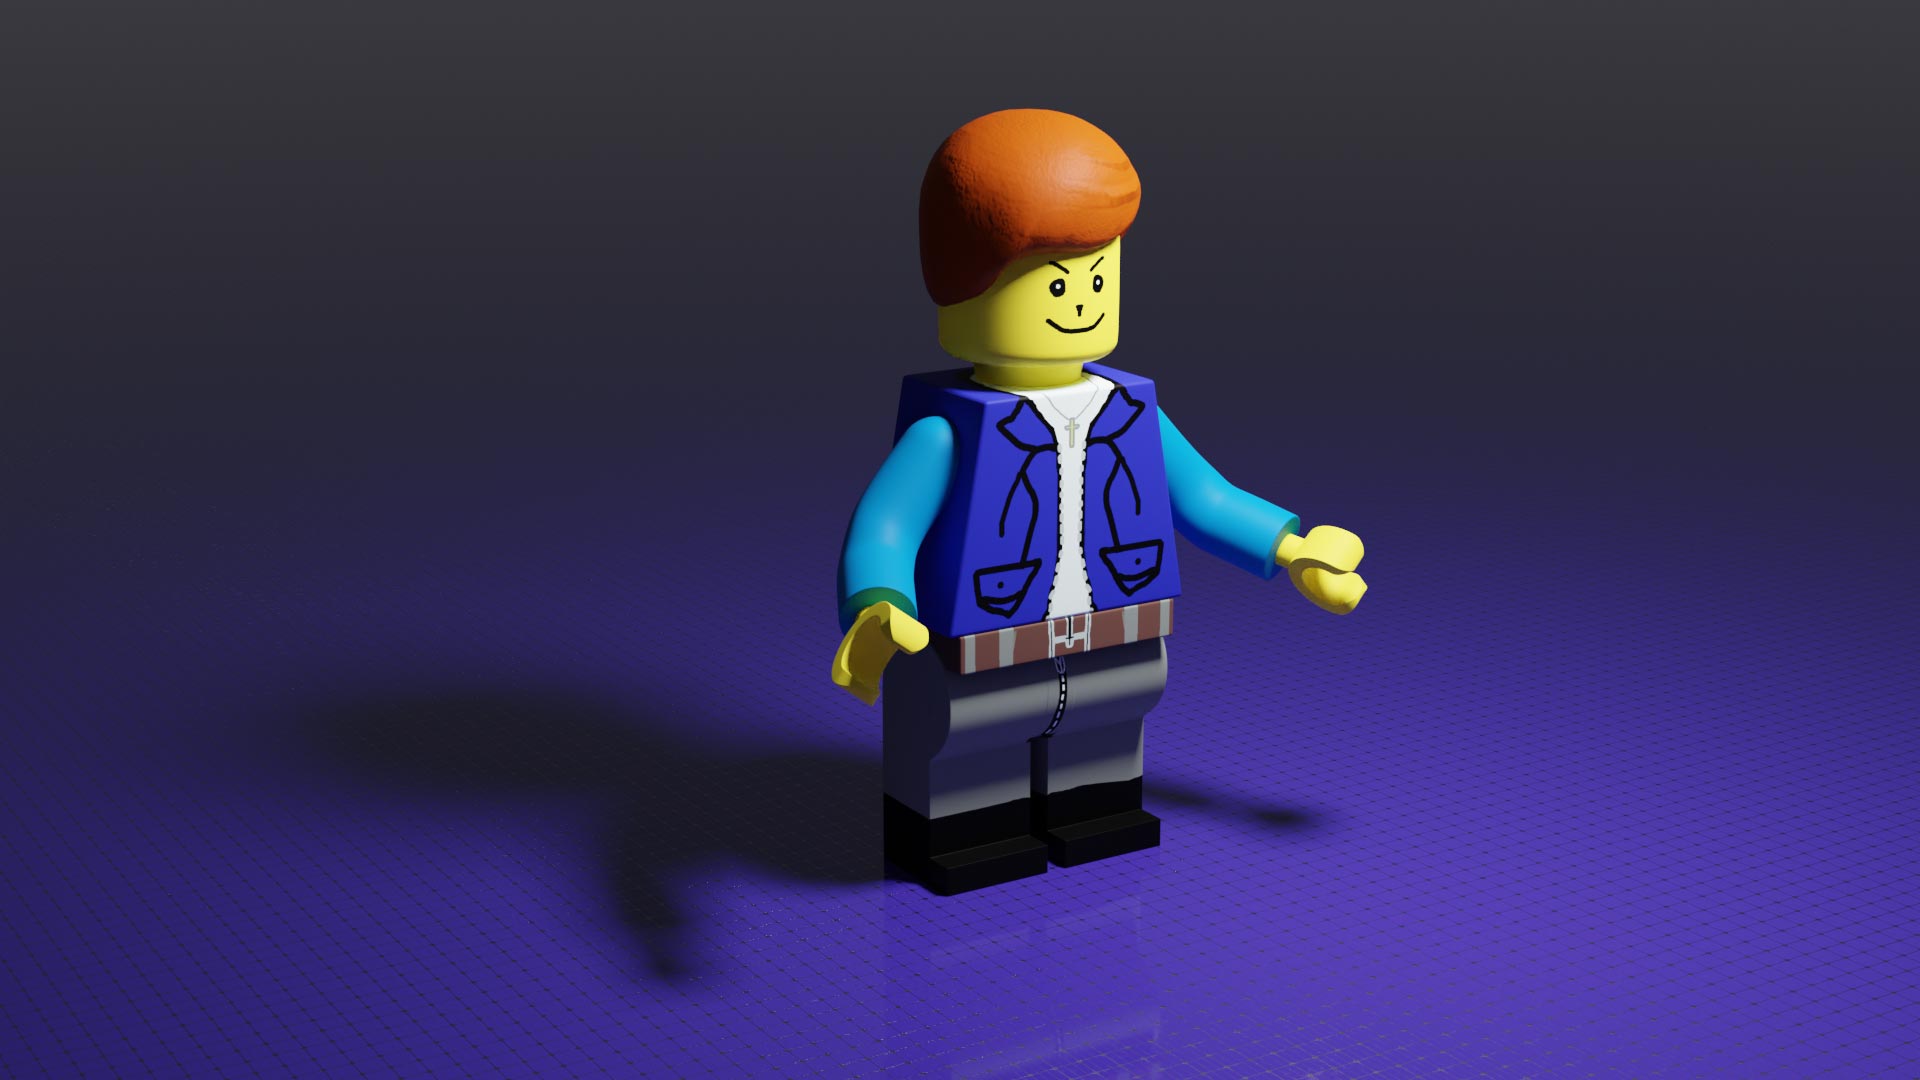 Lego_man_render.jpg